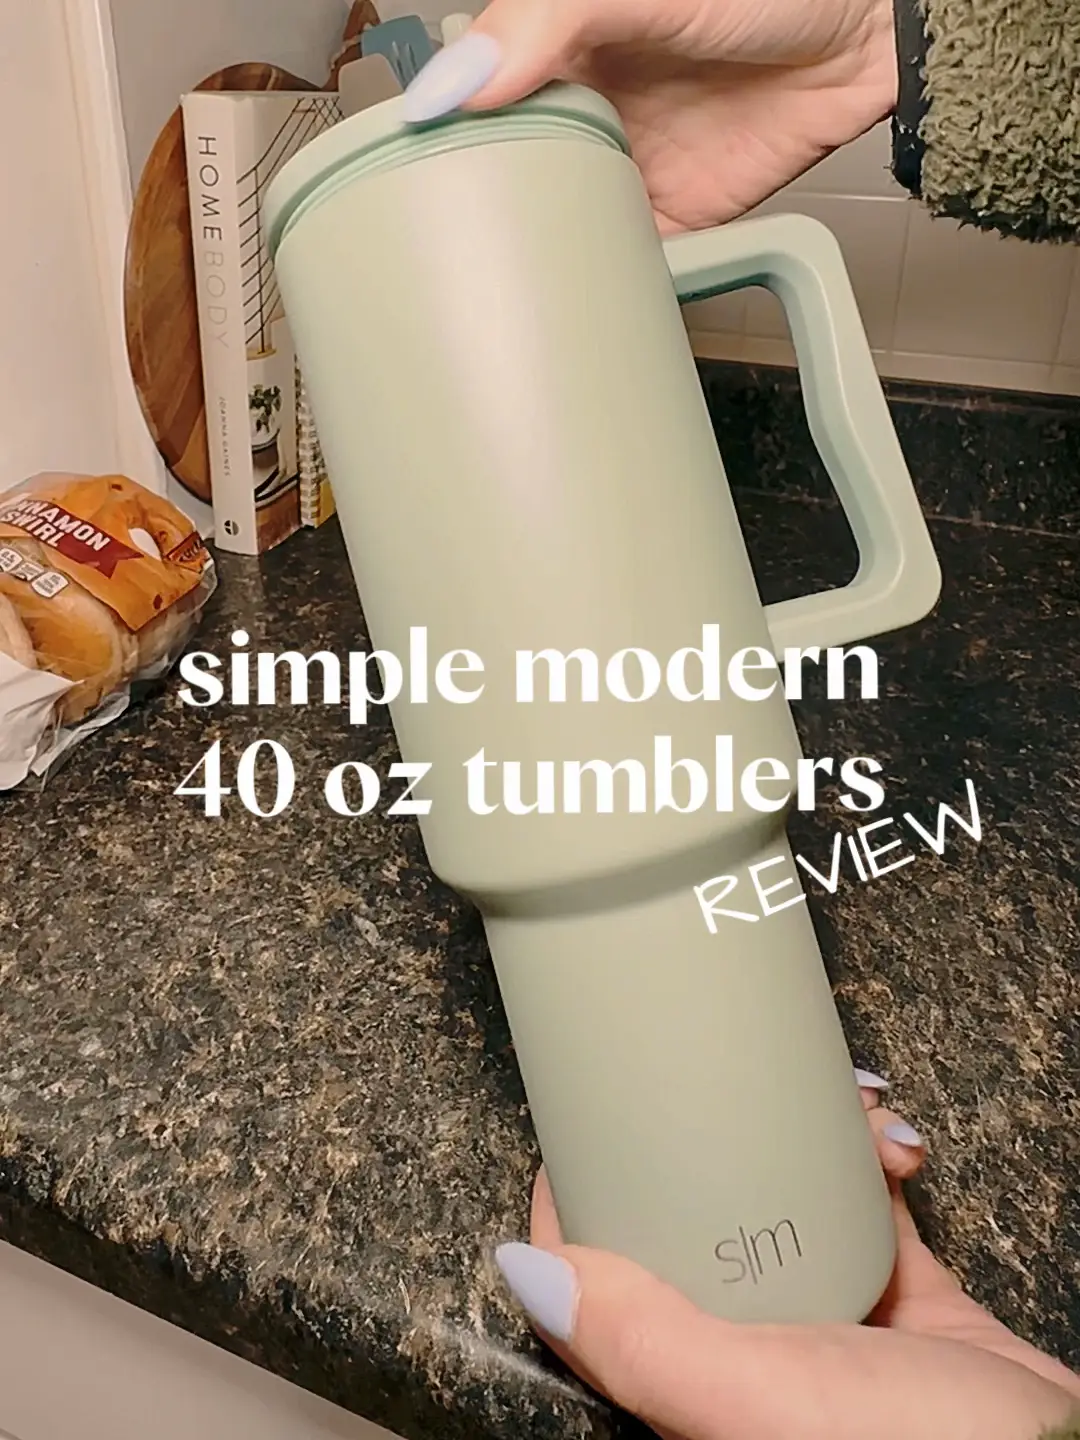 simple modern 40 oz tumblr, review